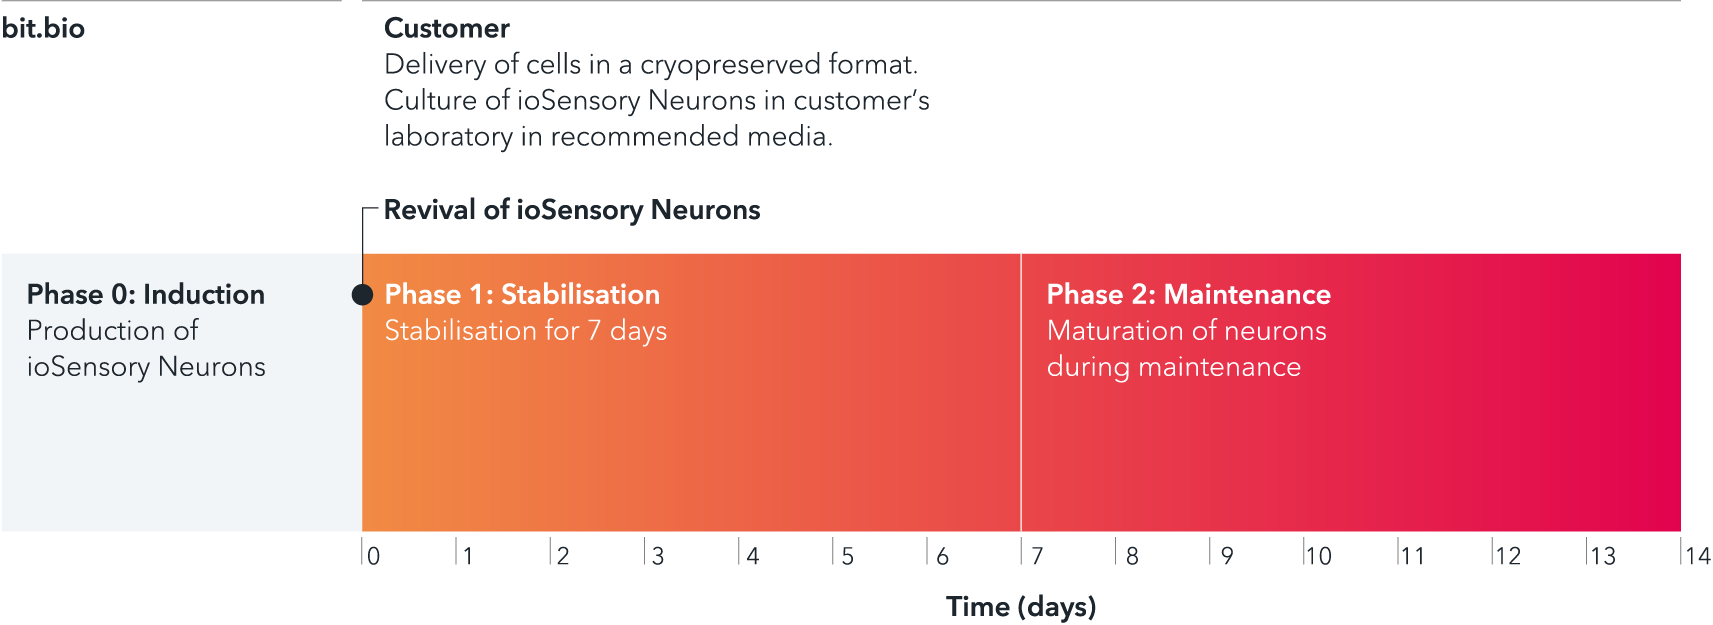 bitbio-iosensory_neurons-diagram